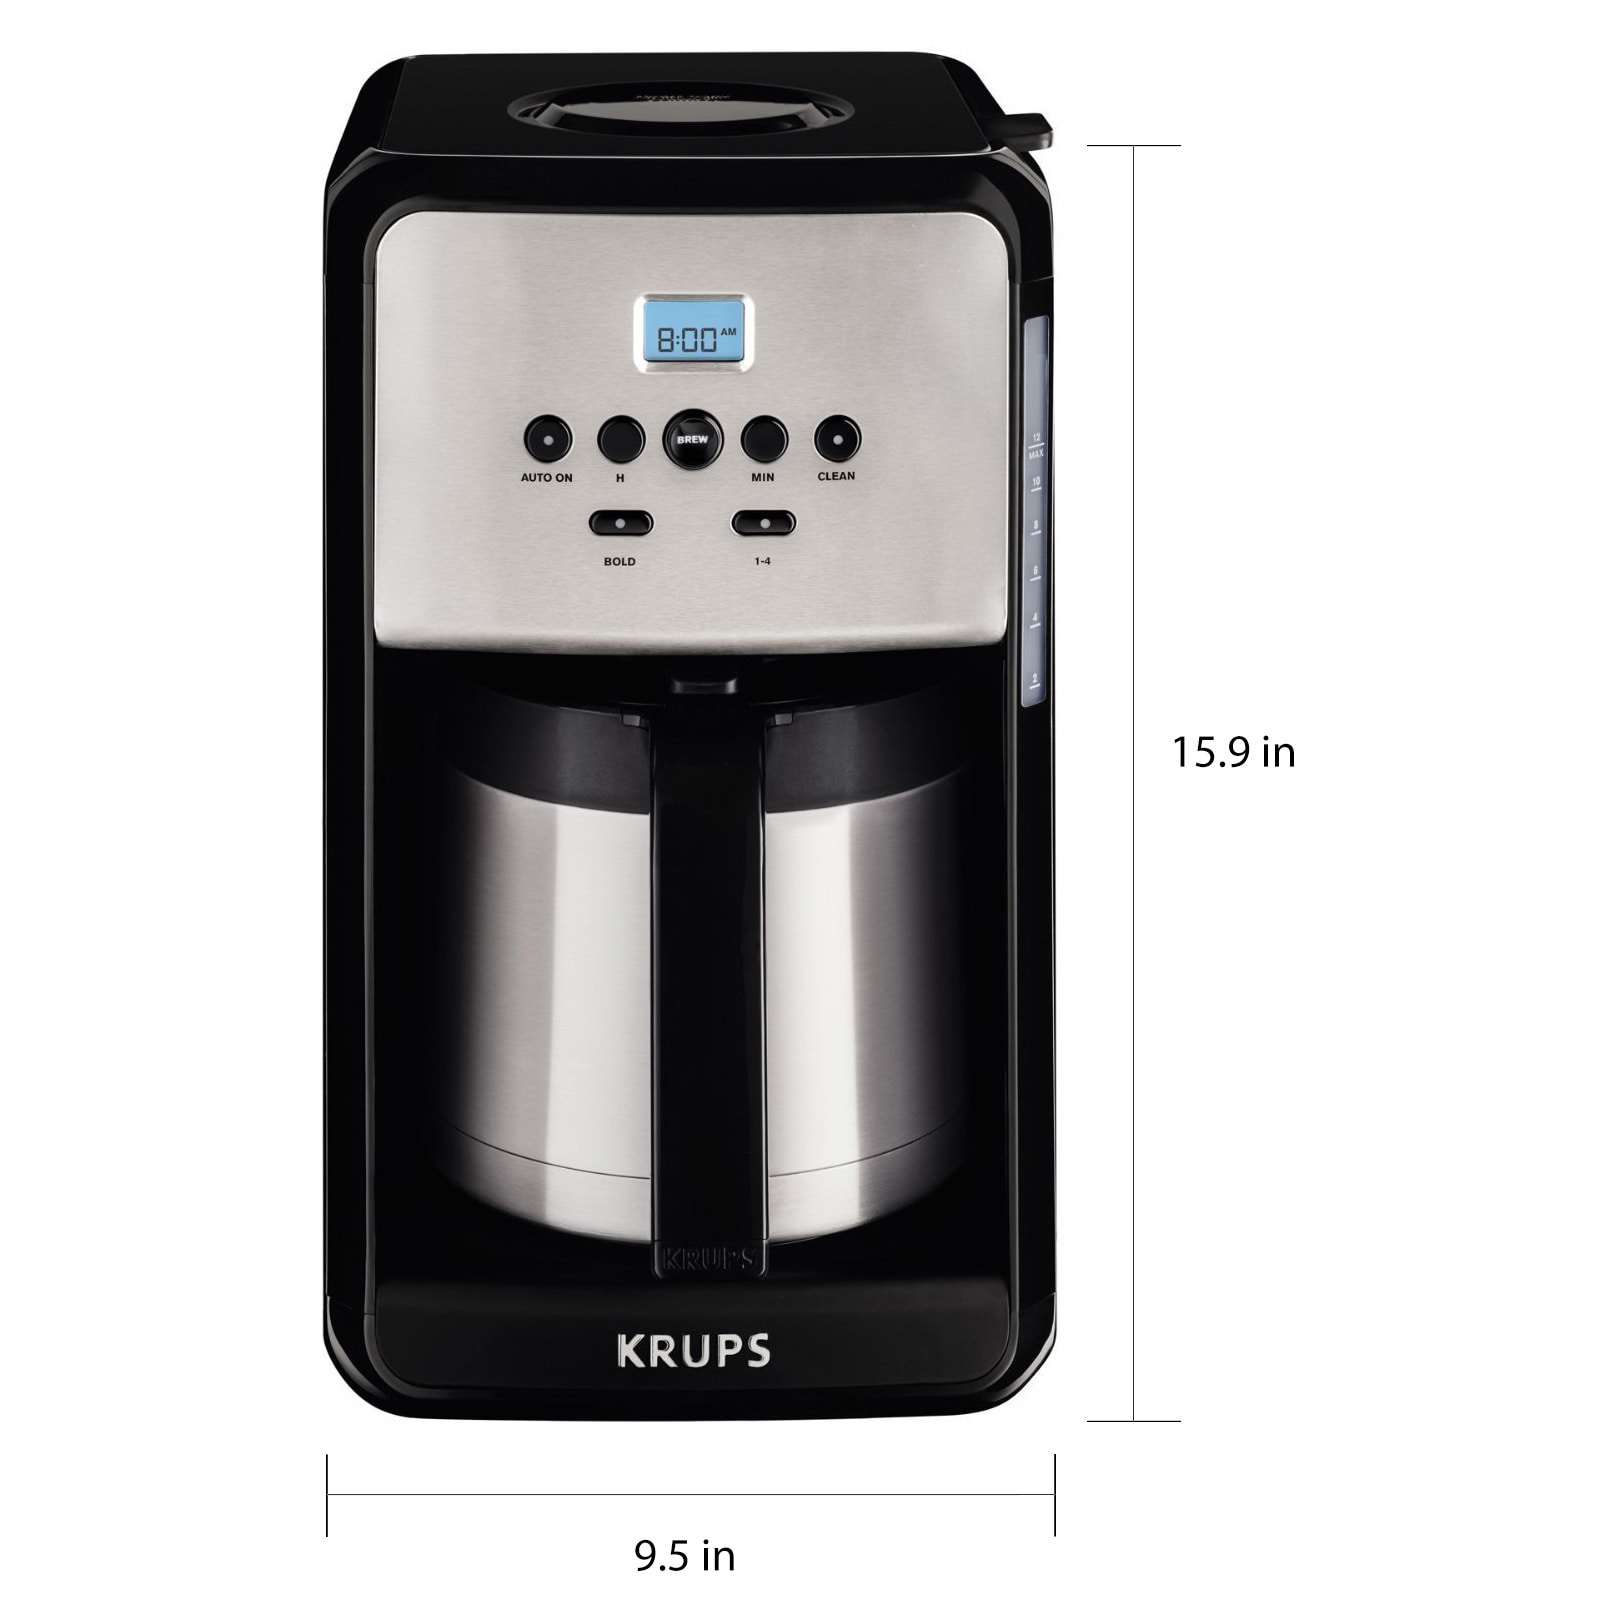 https://ak1.ostkcdn.com/images/products/11537039/Krups-Savoy-12-Cup-Thermal-Coffee-Maker-ET351050-43b0c712-6b9d-44e3-bffd-4041ec4de18d.jpg